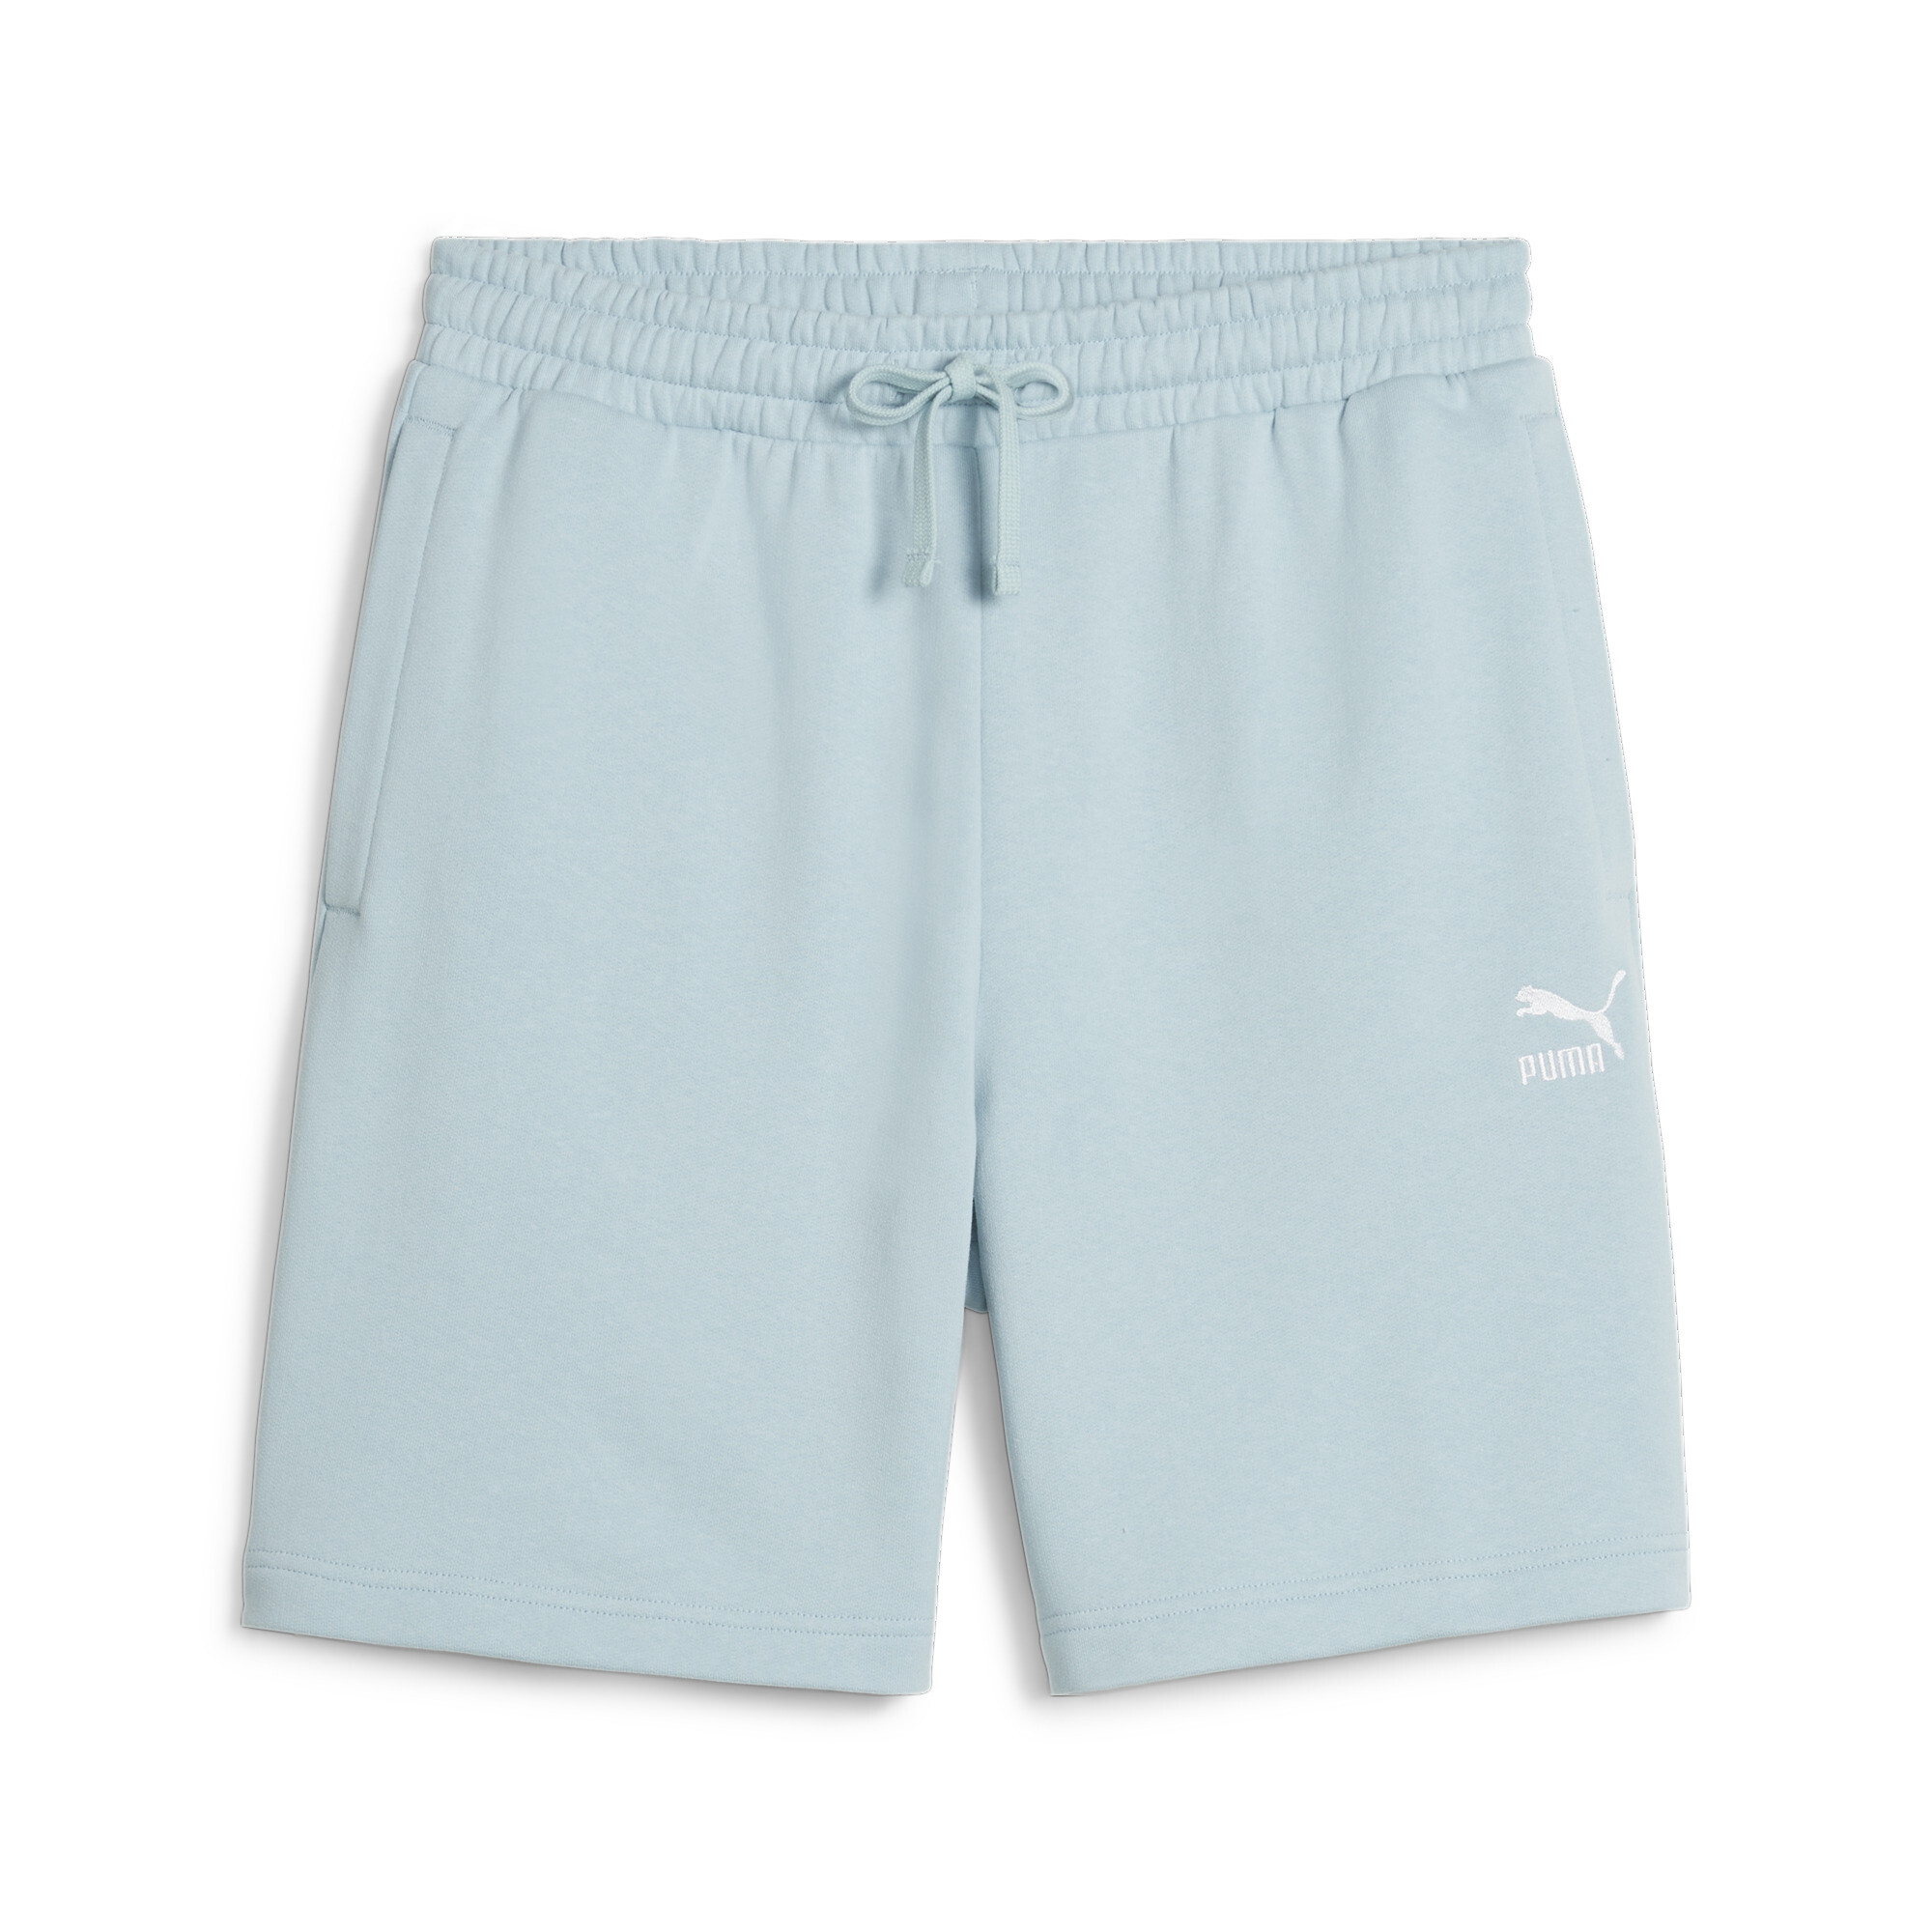 Puma BETTER CLASSICS Shorts, Blue, Size L, Clothing